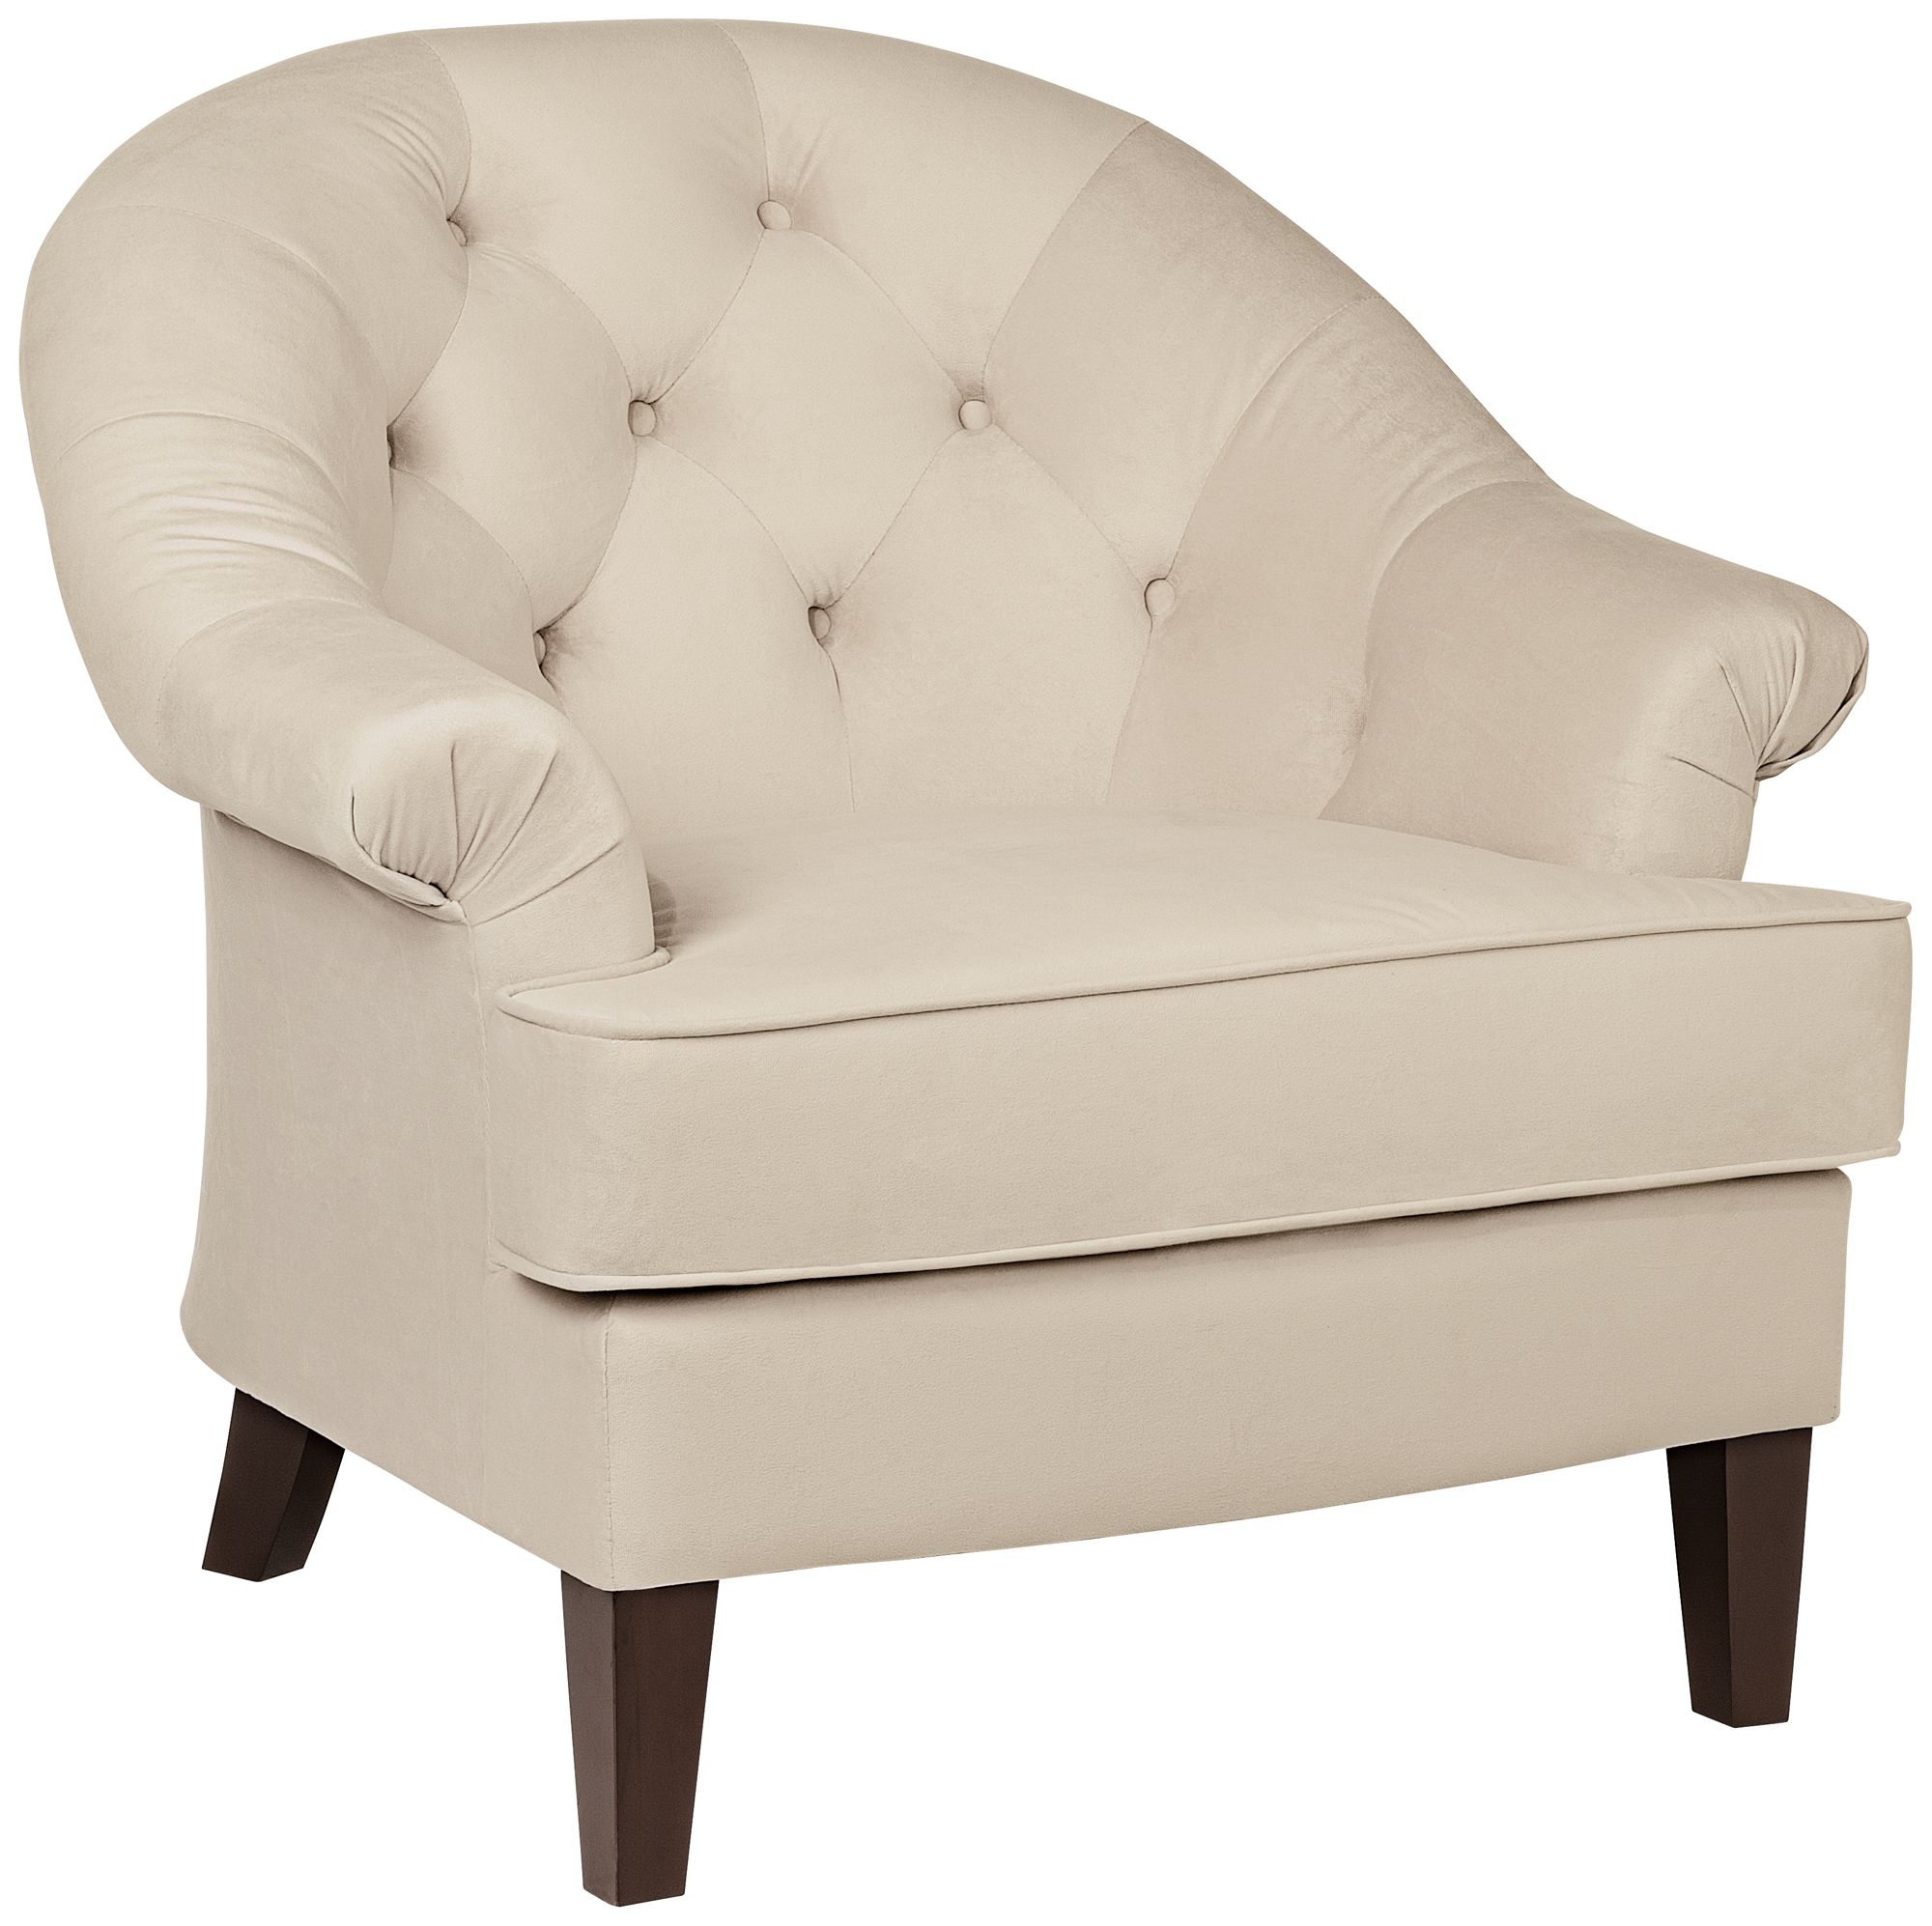 Kash Cream Fabric Upholstered Armchair - Image 0